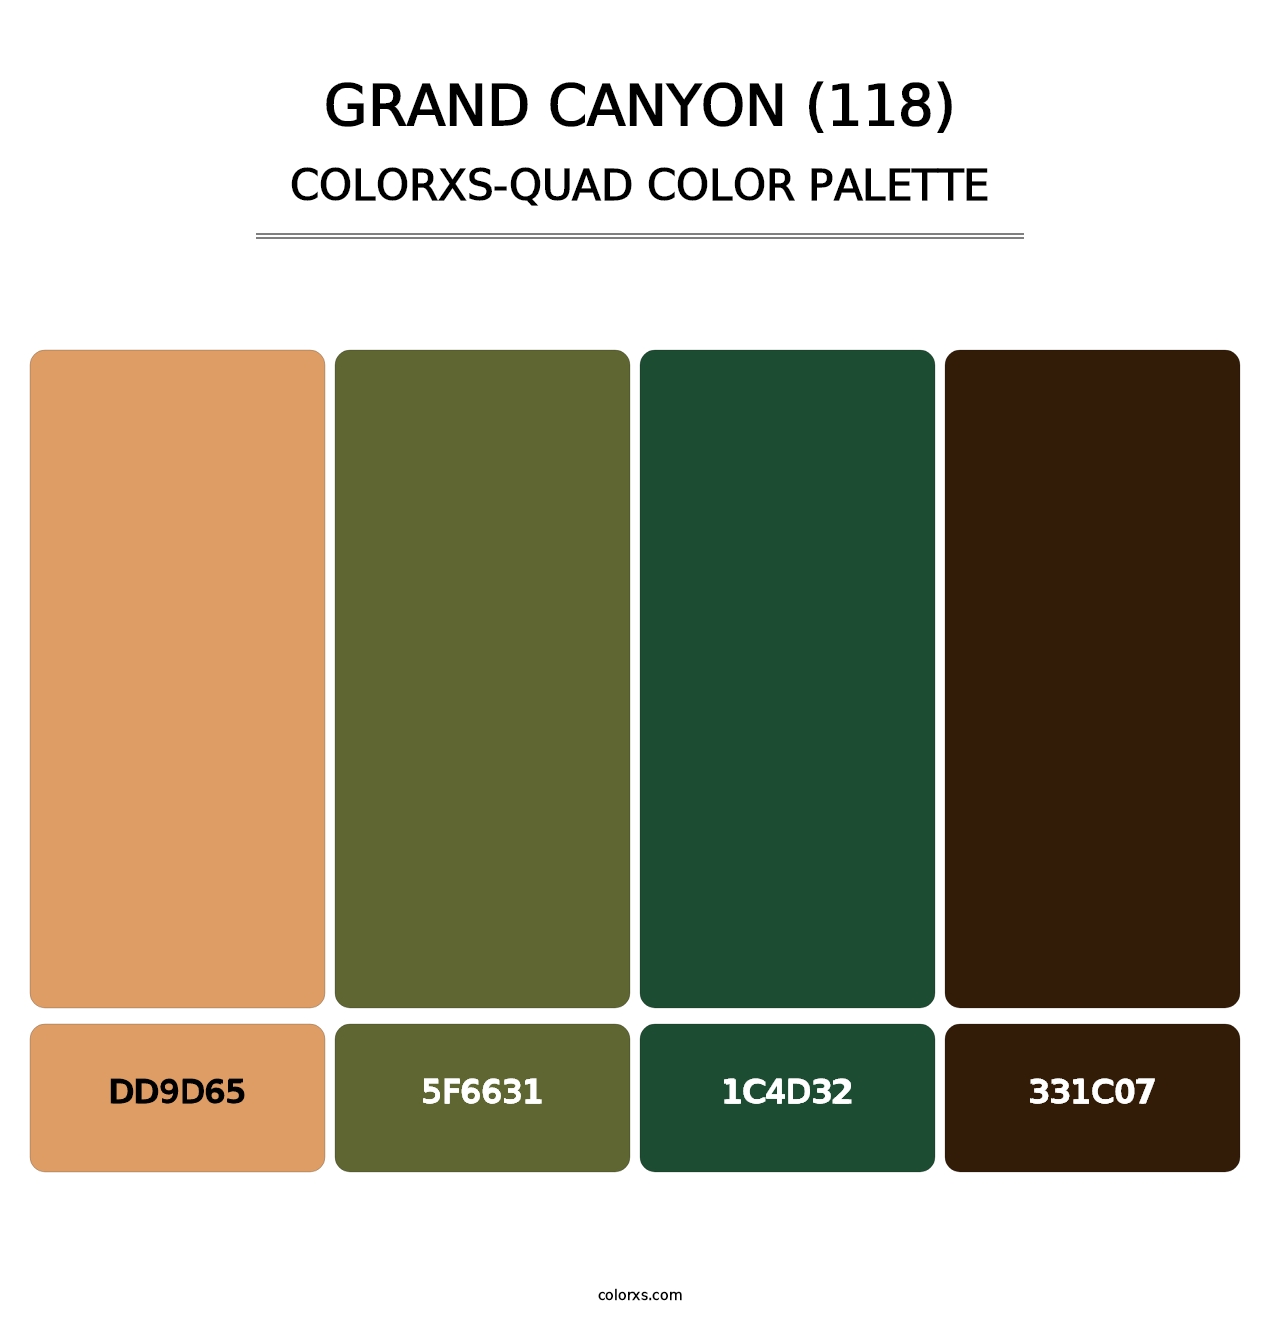 Grand Canyon (118) - Colorxs Quad Palette